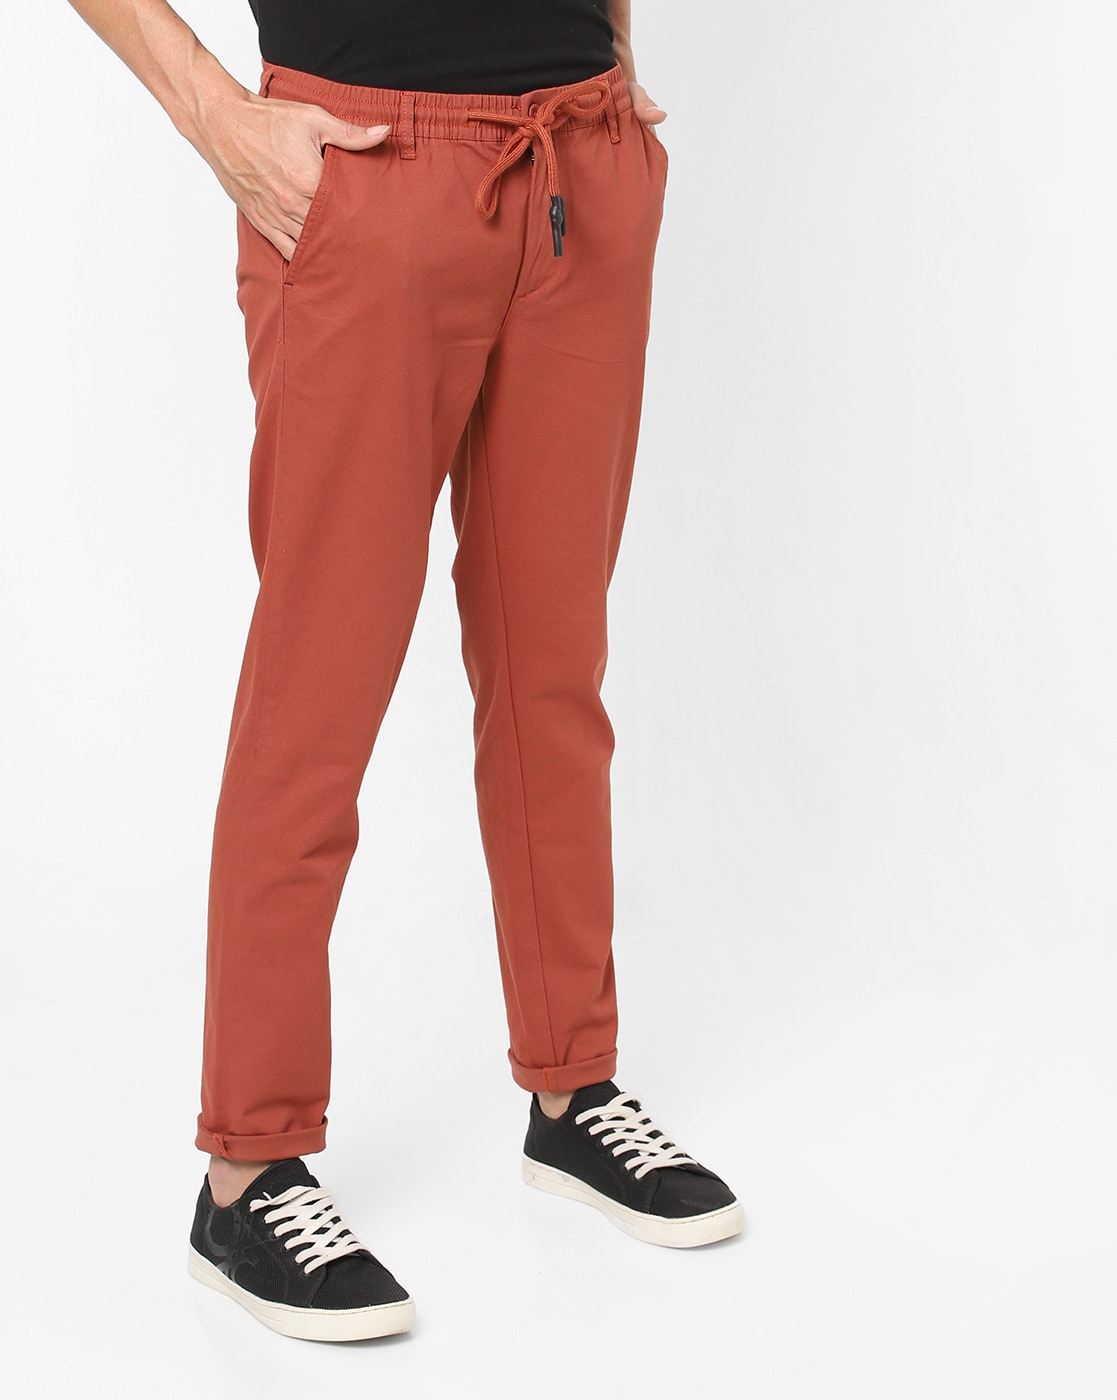 Orange Trousers Men  Buy Orange Trousers Men online in India